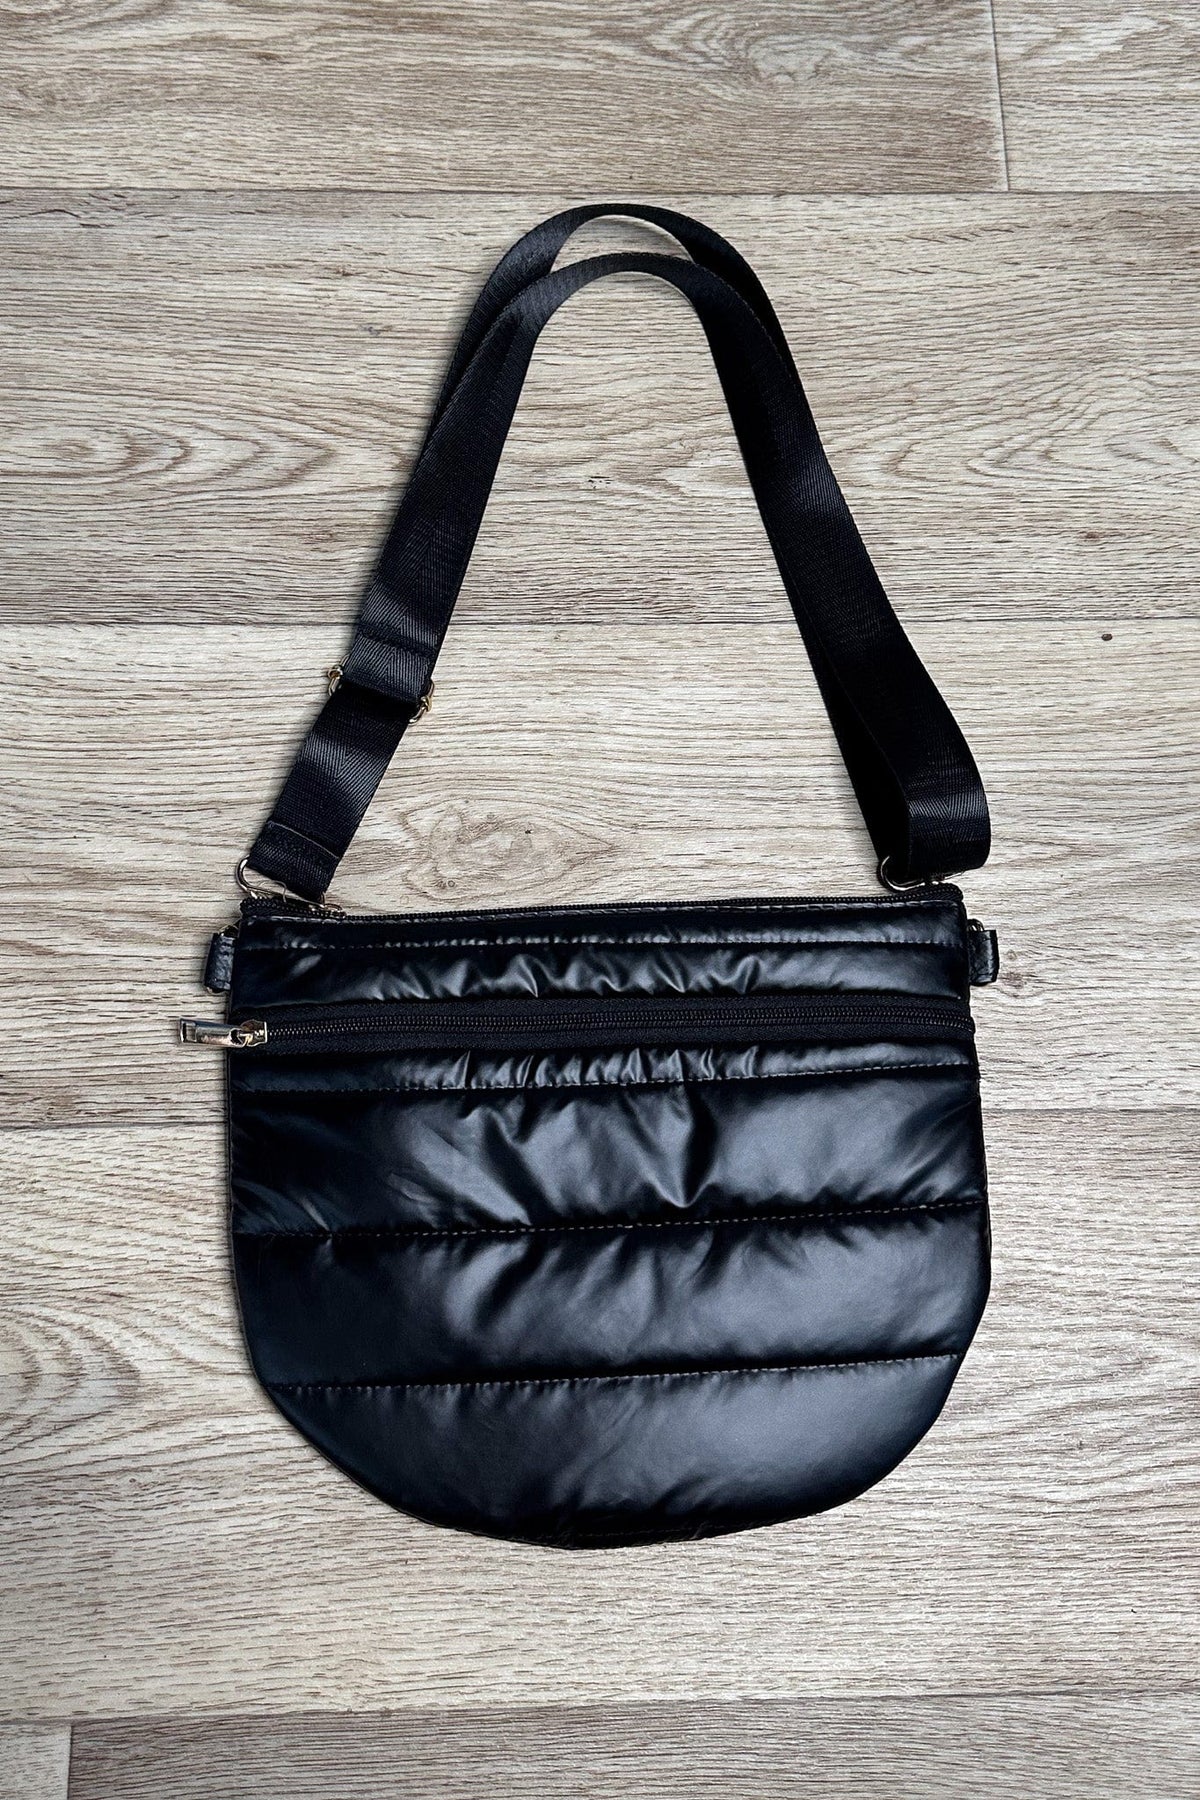 Black Puffy Half Moon Bag